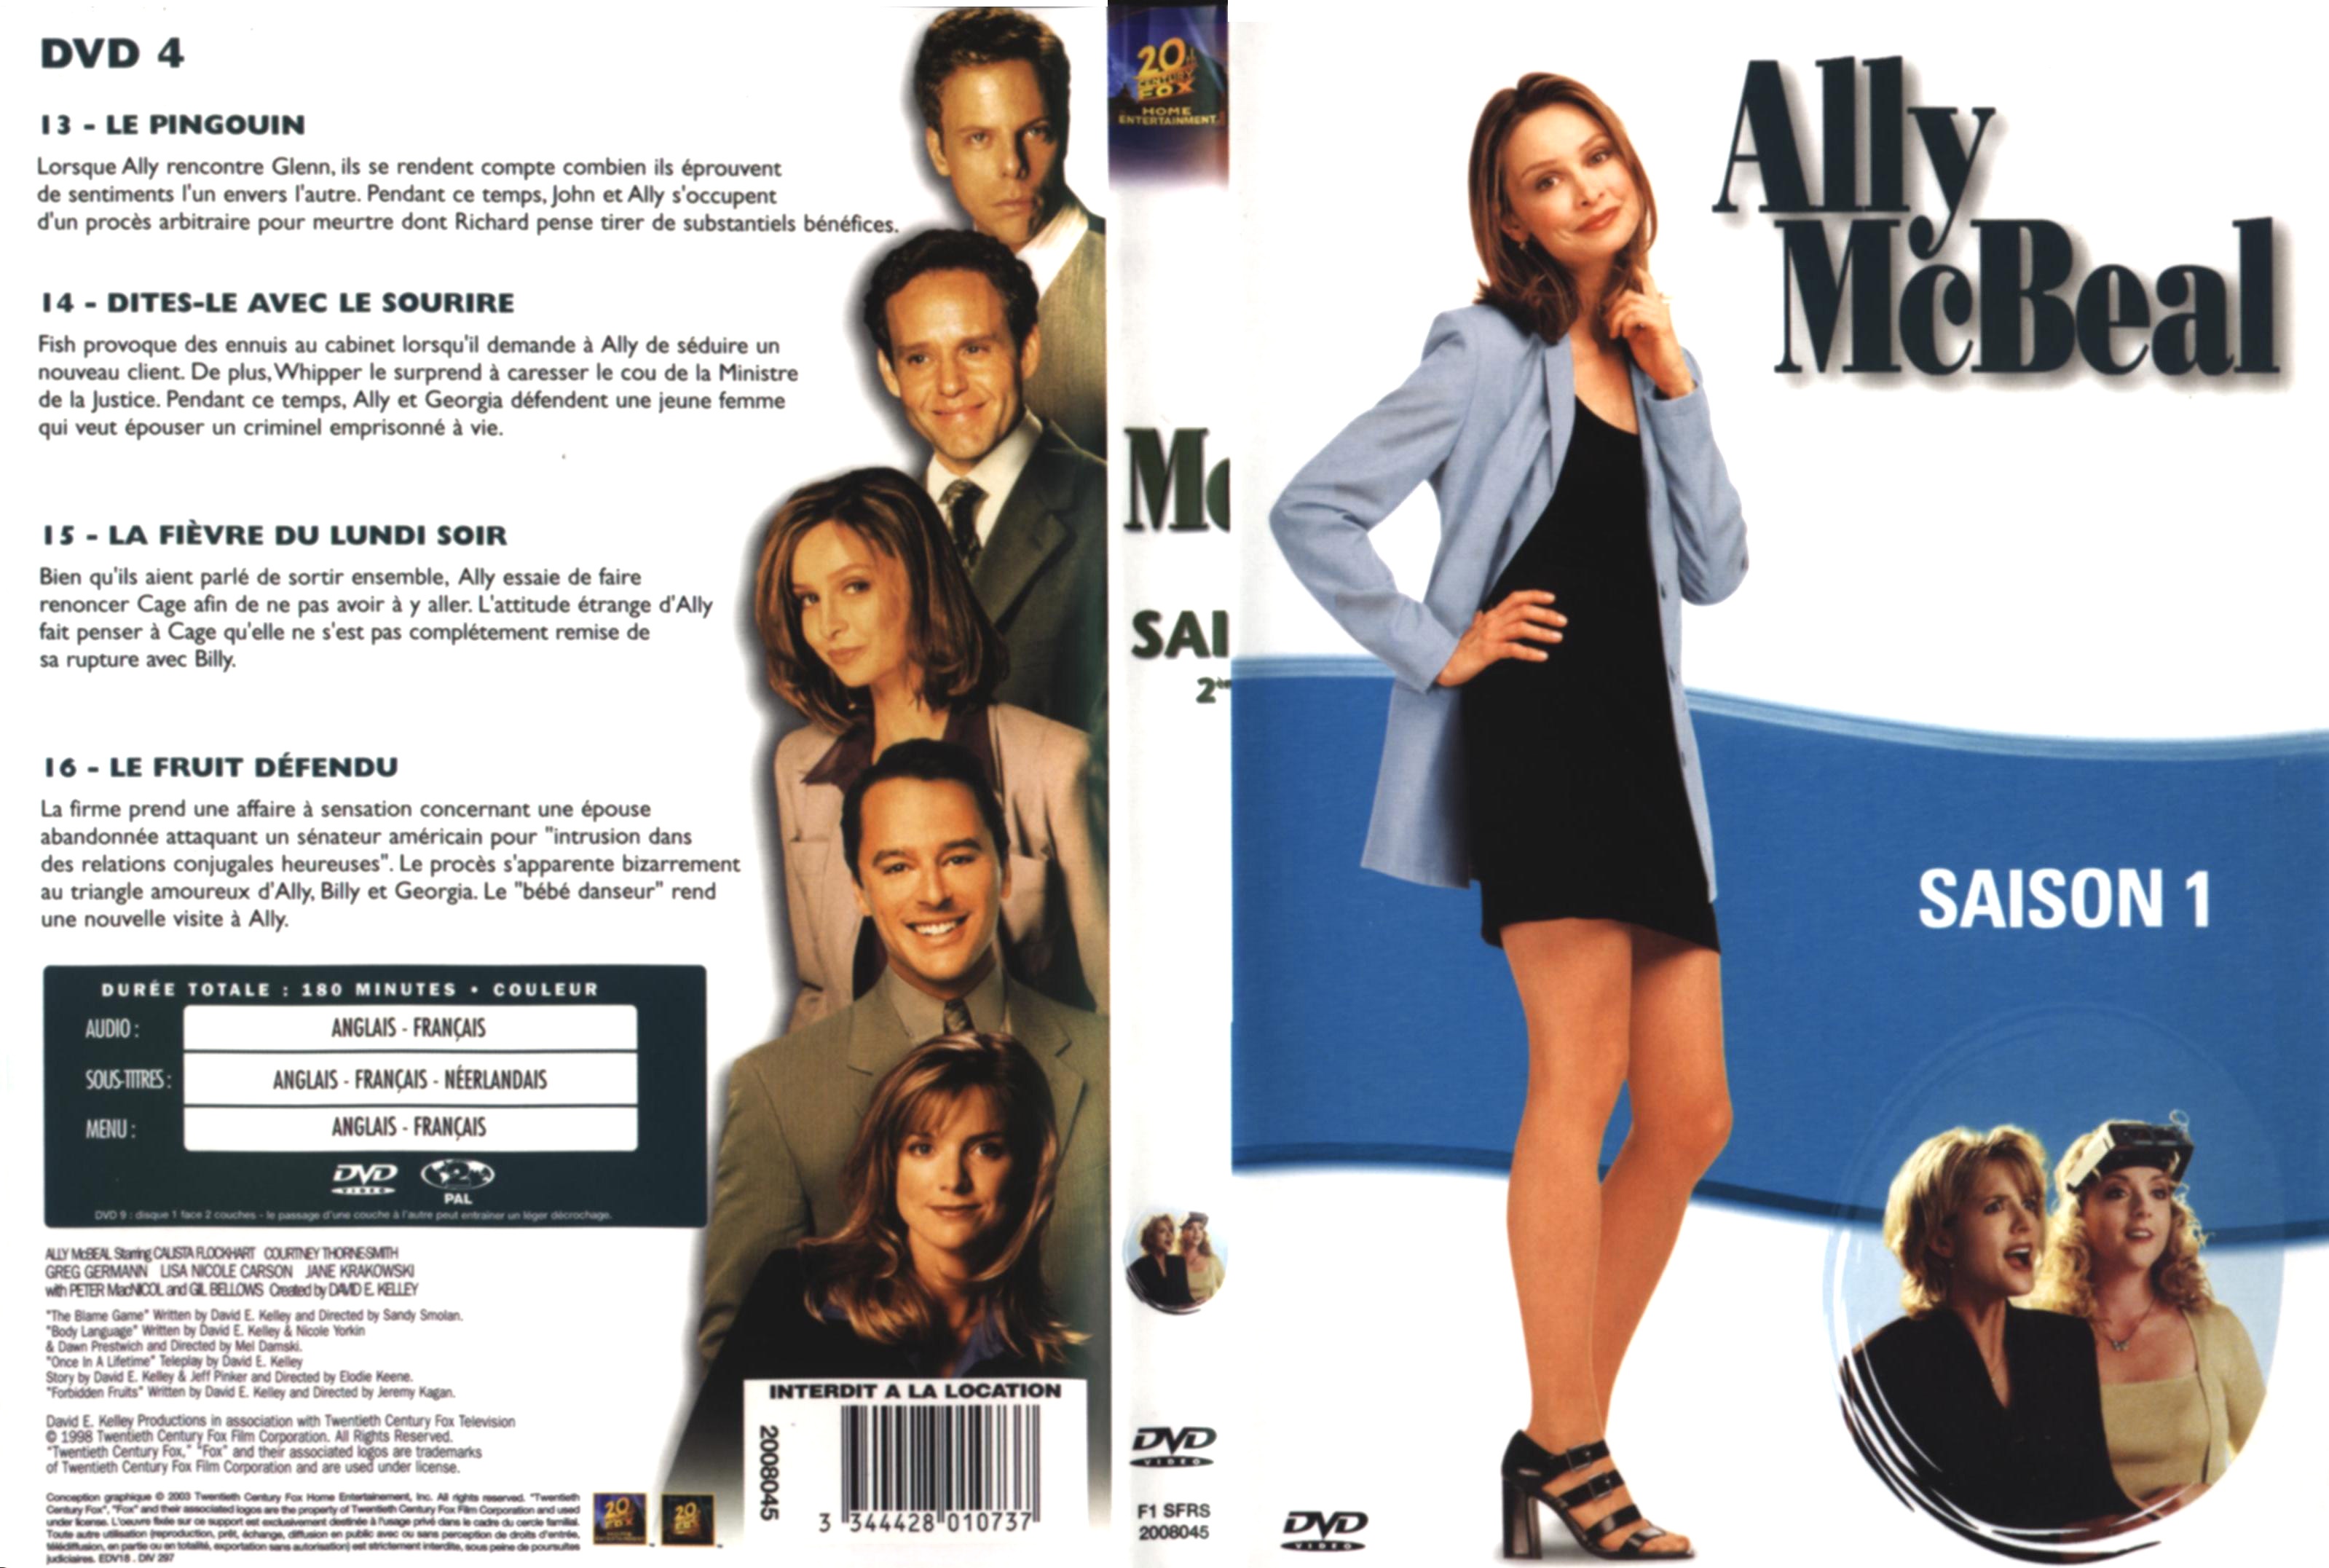 Jaquette DVD Ally McBeal Saison 1 DVD 4